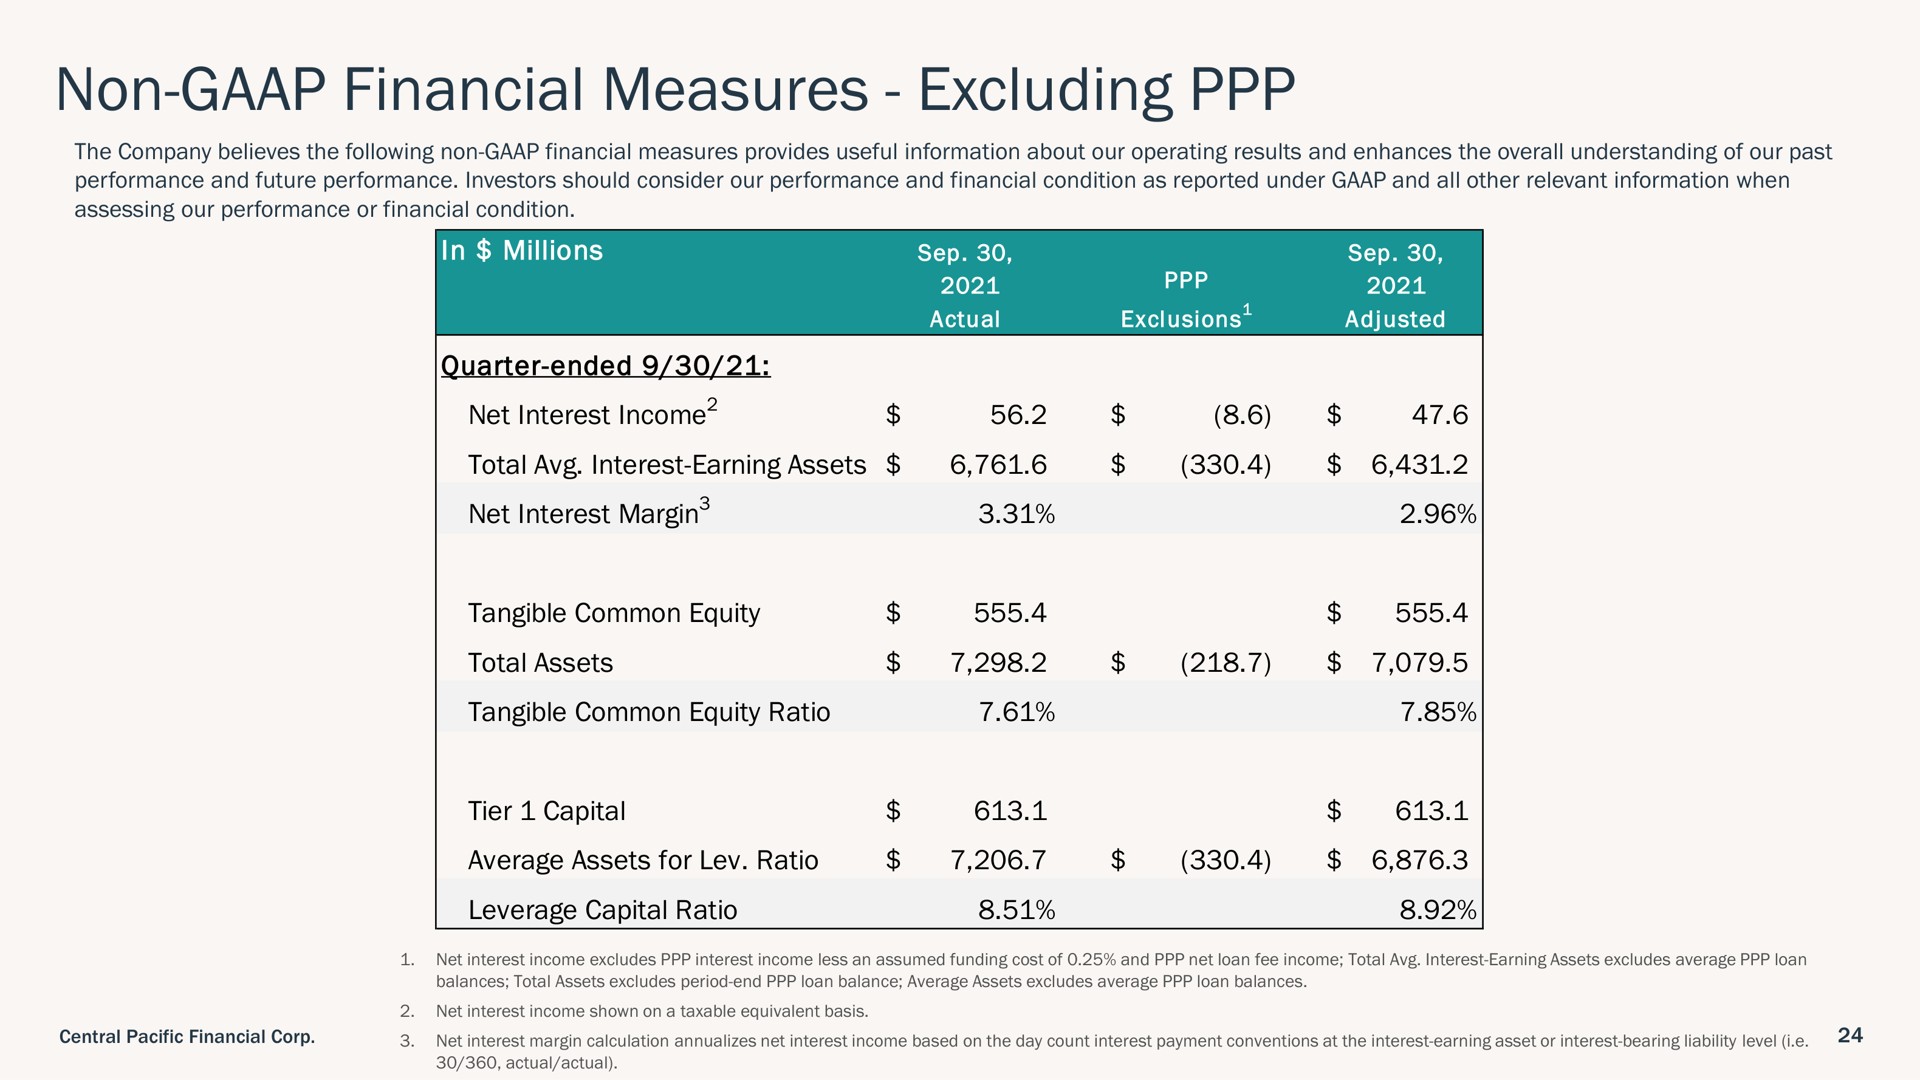 non financial measures excluding | Central Pacific Financial